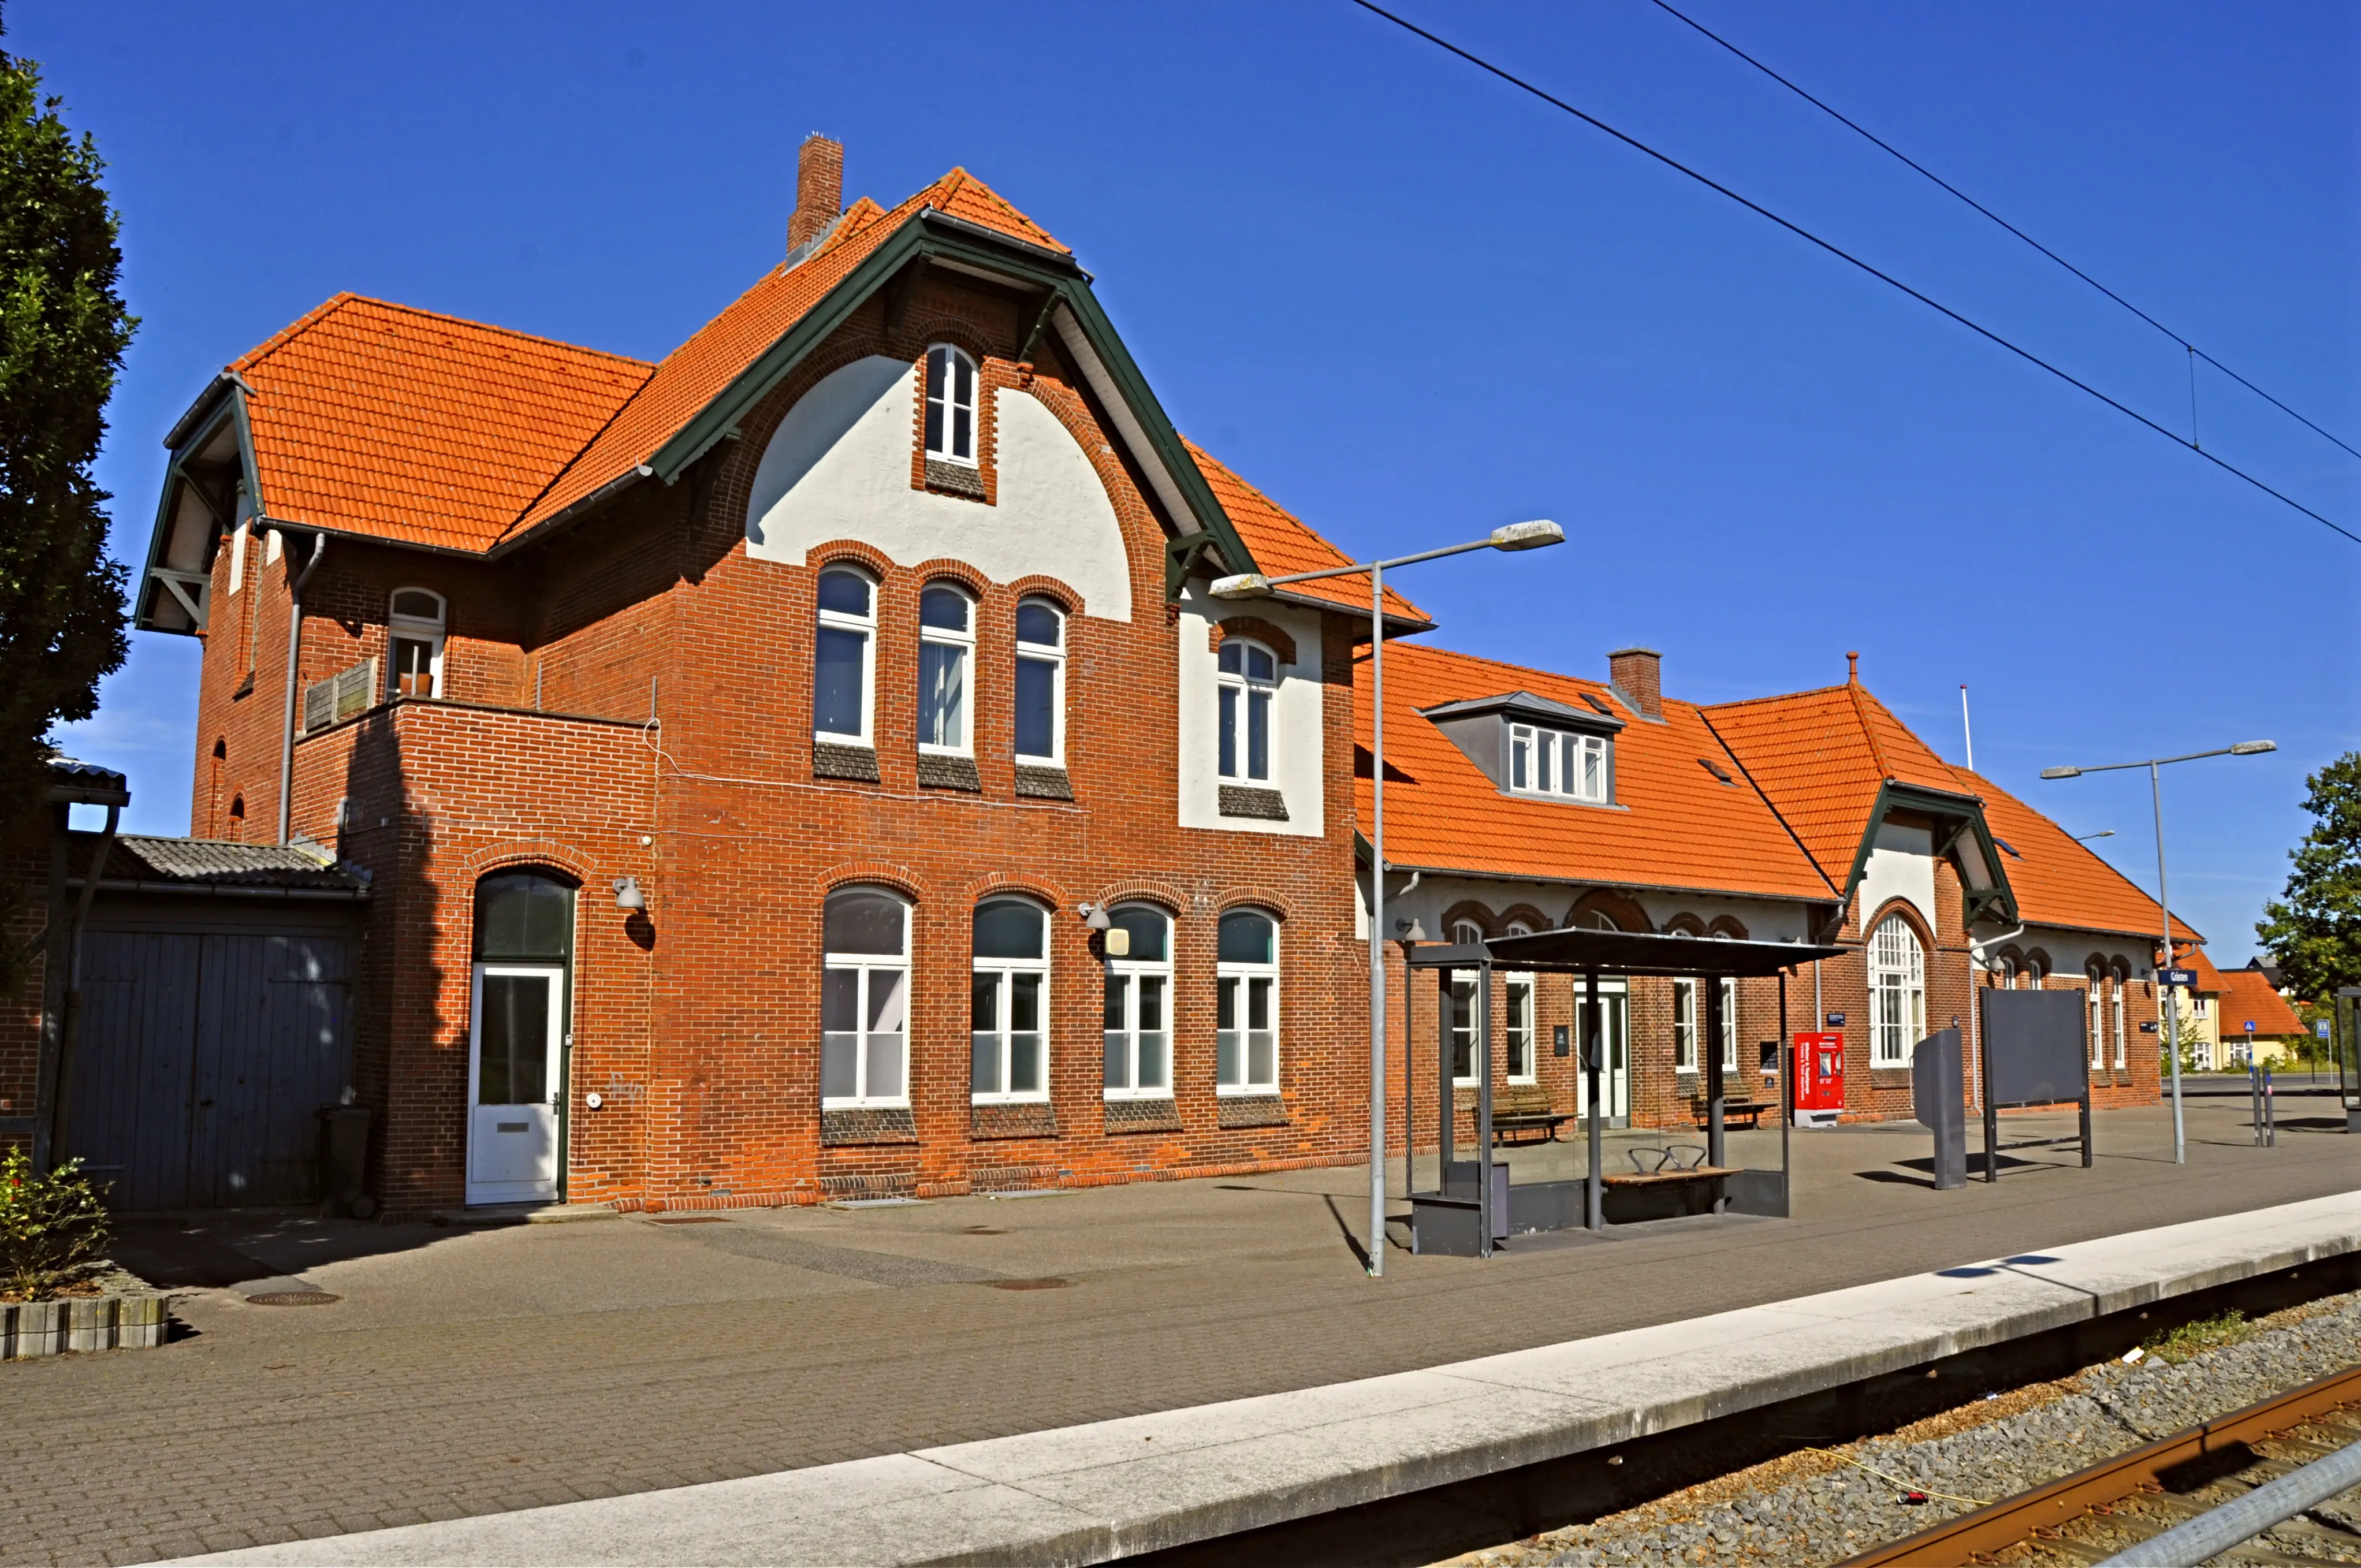 Gråsten Station.